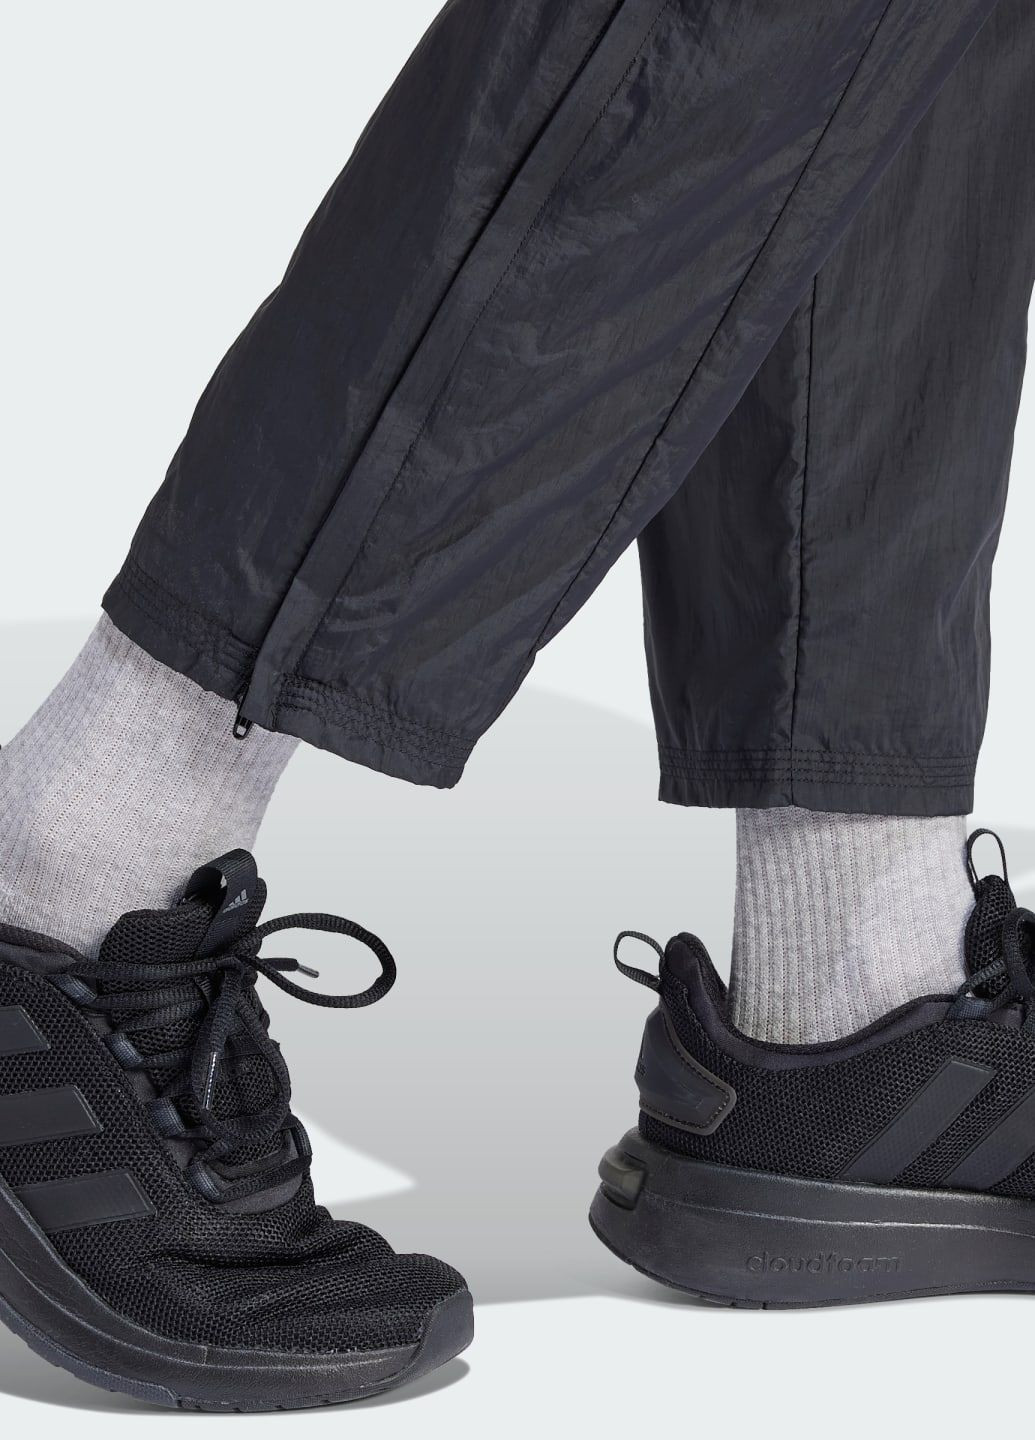 Спортивные брюки Tiro Cut 3-Stripes Summer Woven adidas (291118273)